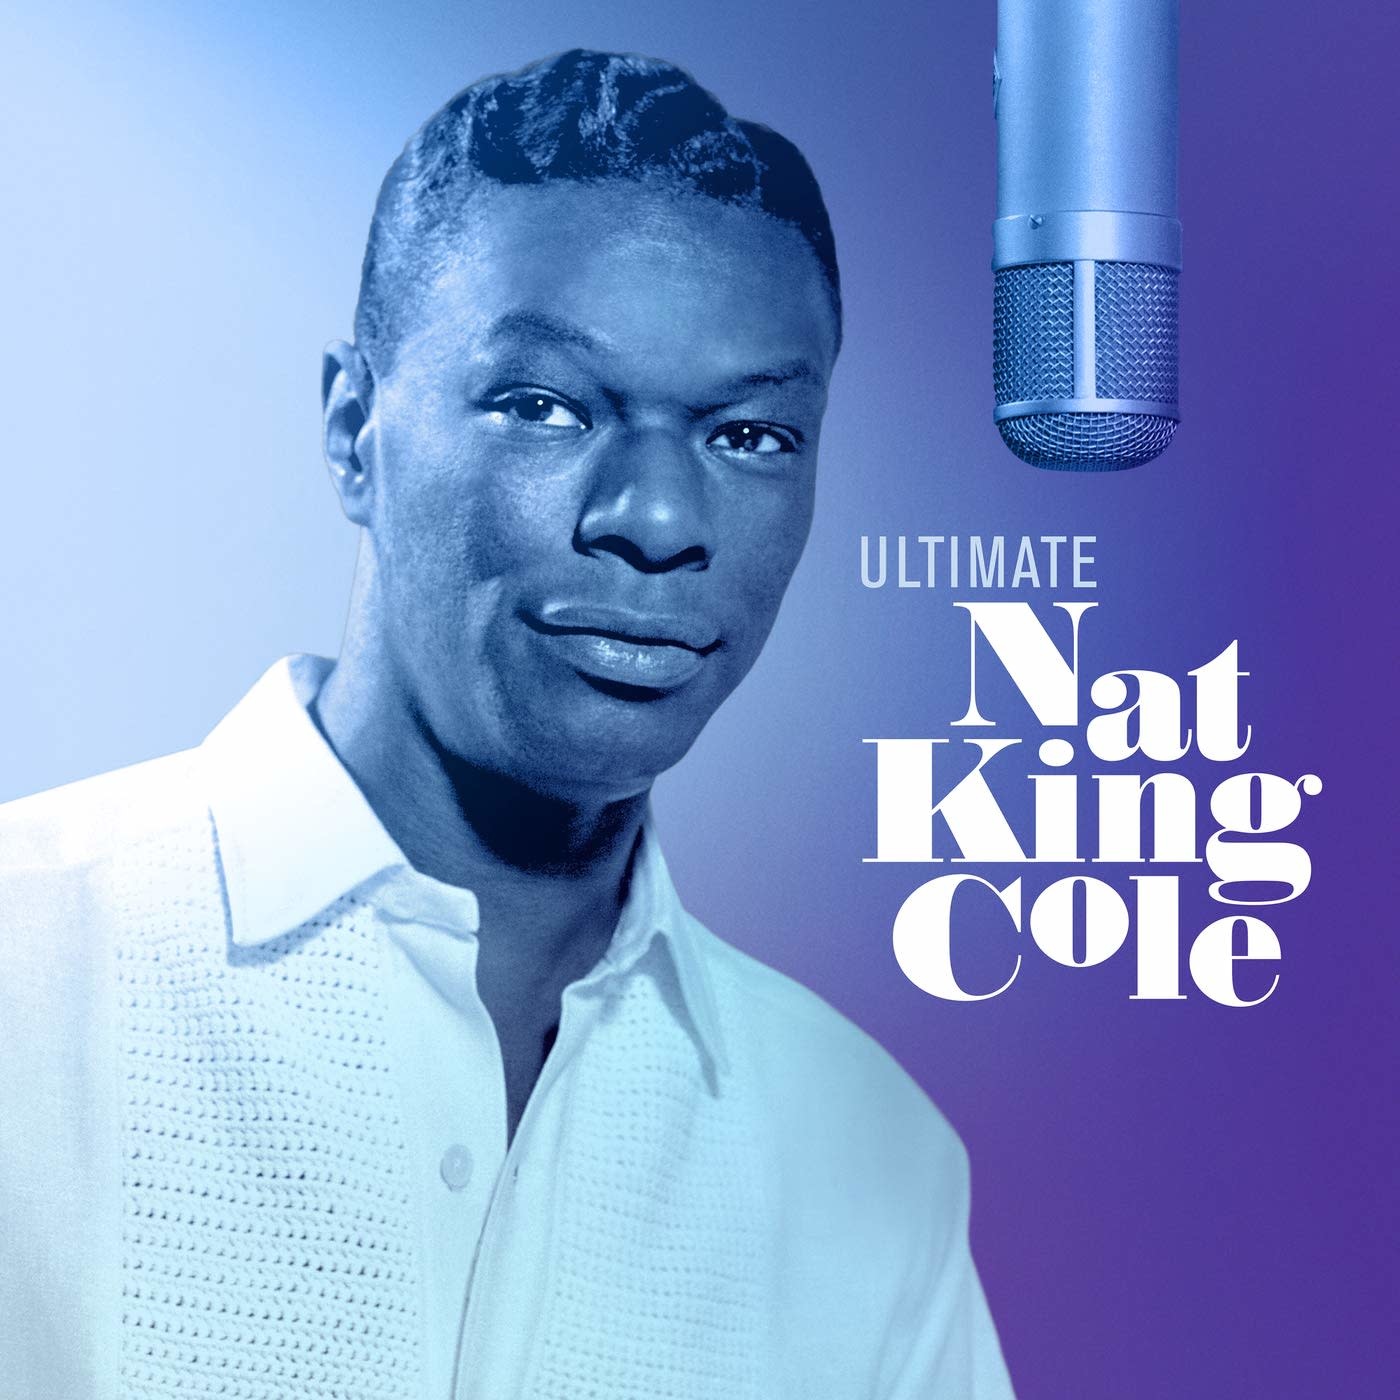 Nat King Cole - Ultimate